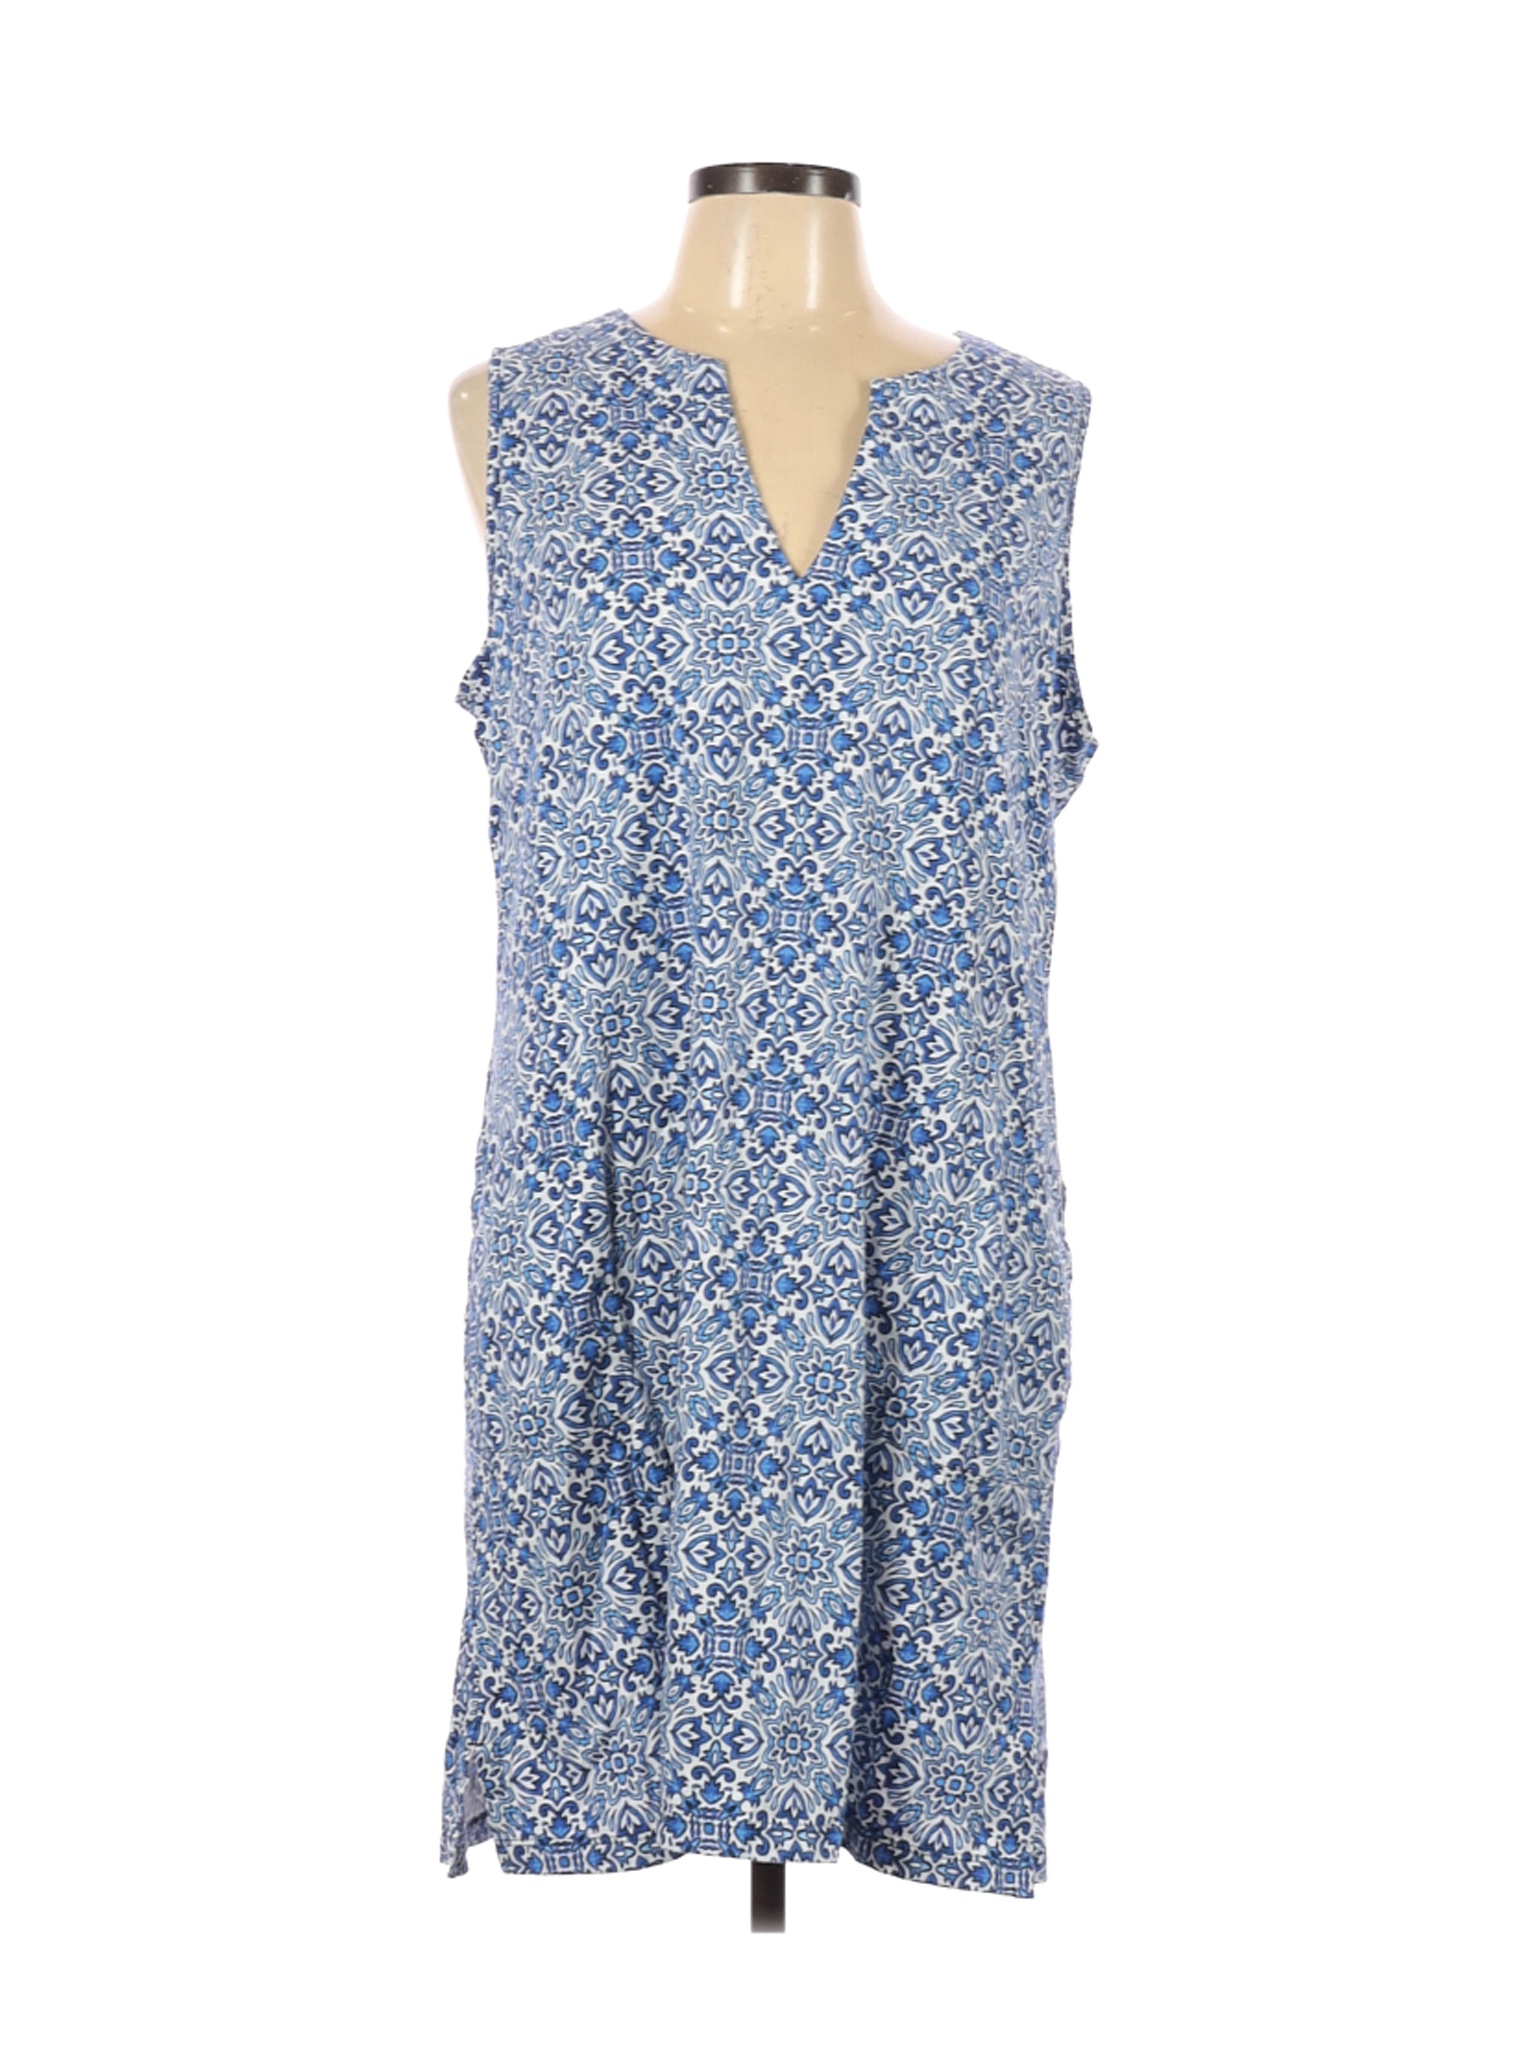 Lands' End Women Blue Casual Dress L | eBay